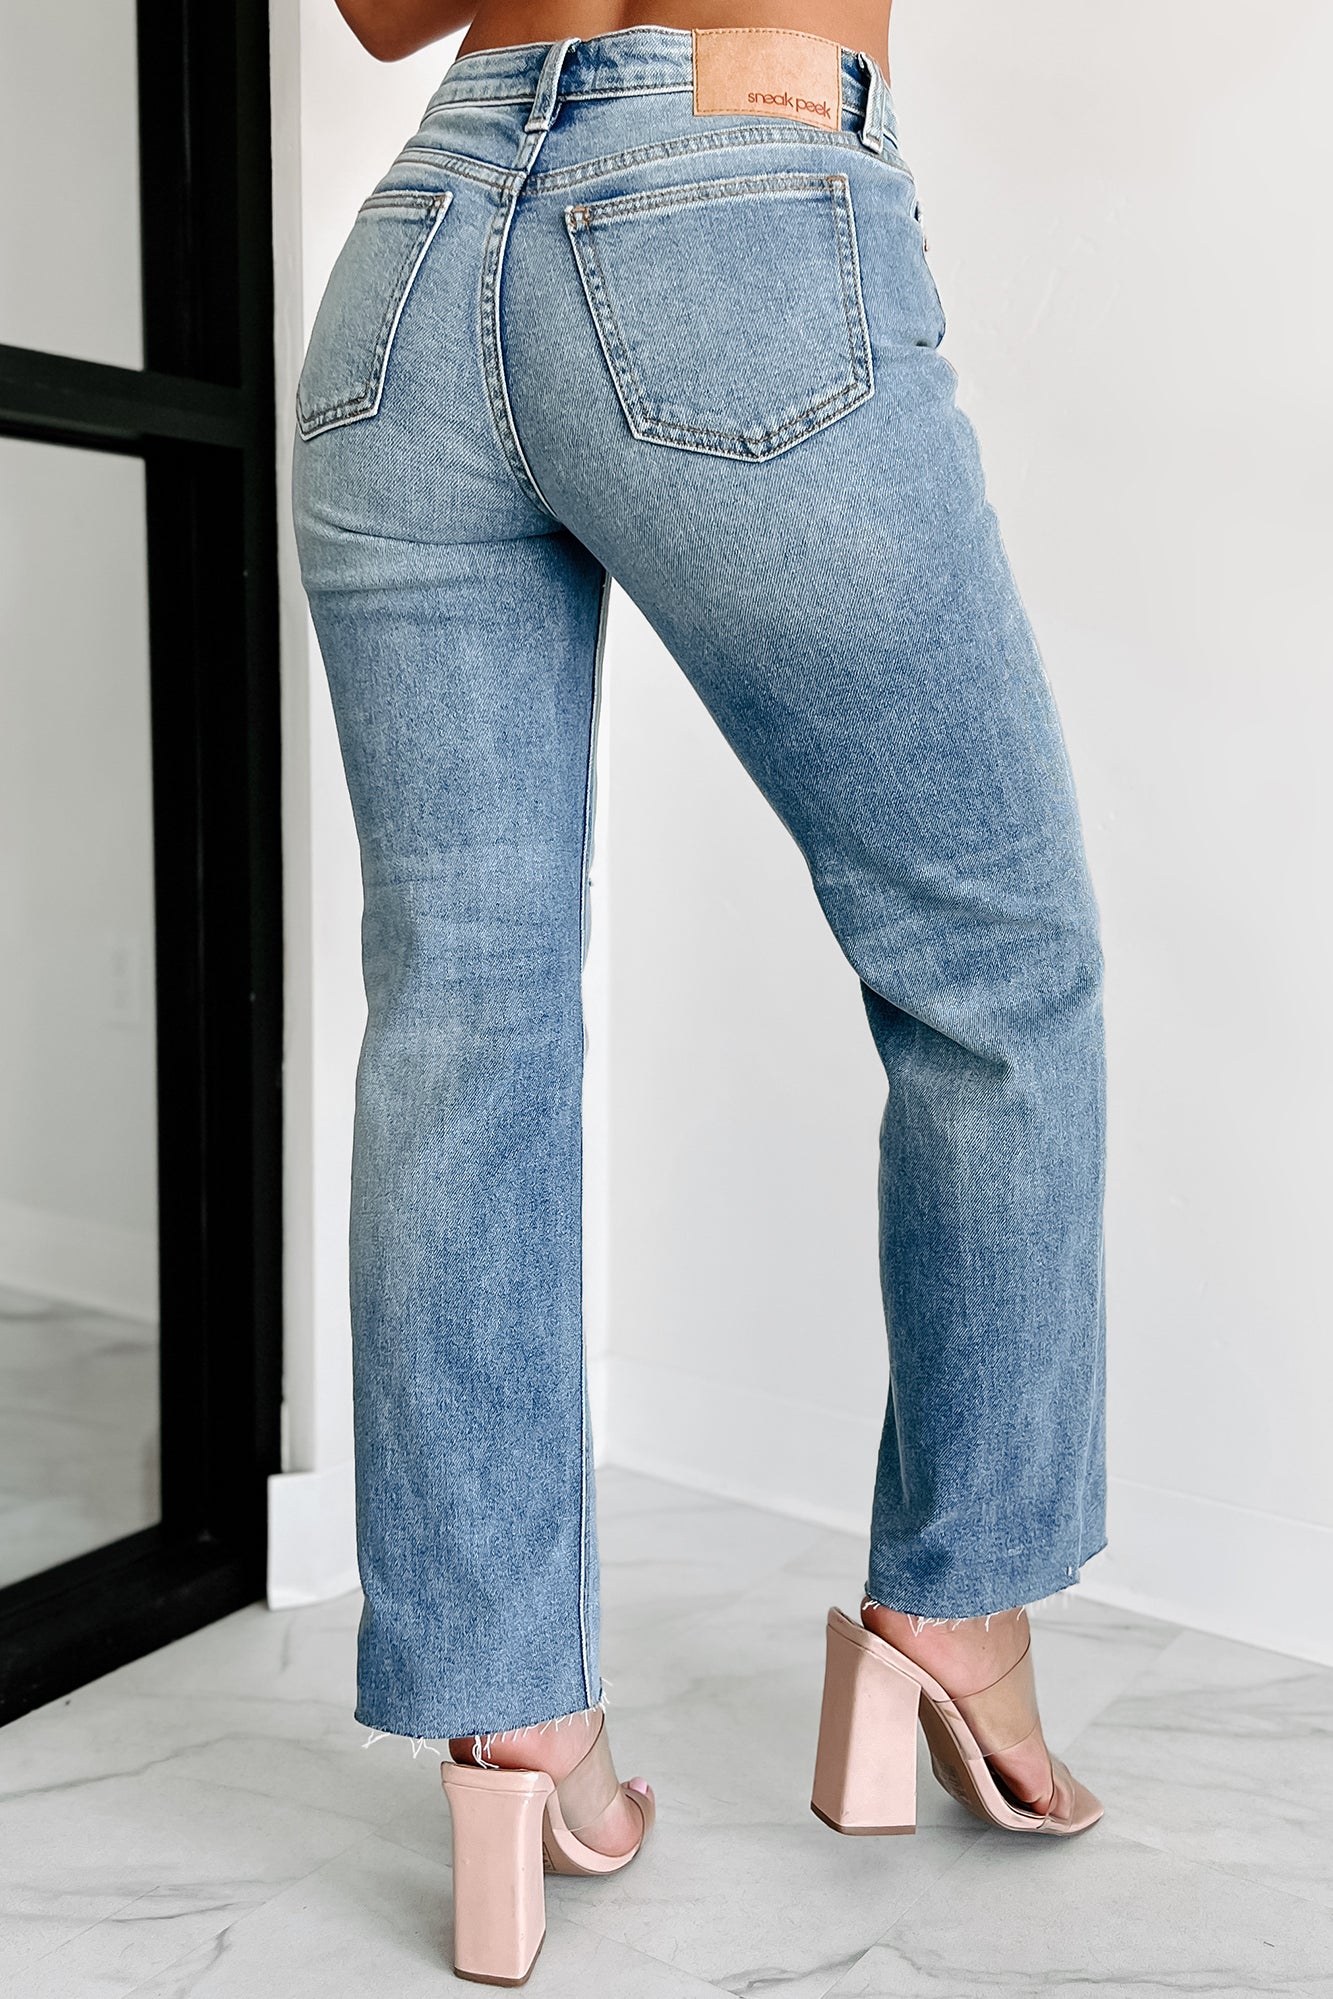 Doorbuster Keep My Composure Distressed Sneak Peek Straight Leg Jeans (Medium Light) - NanaMacs